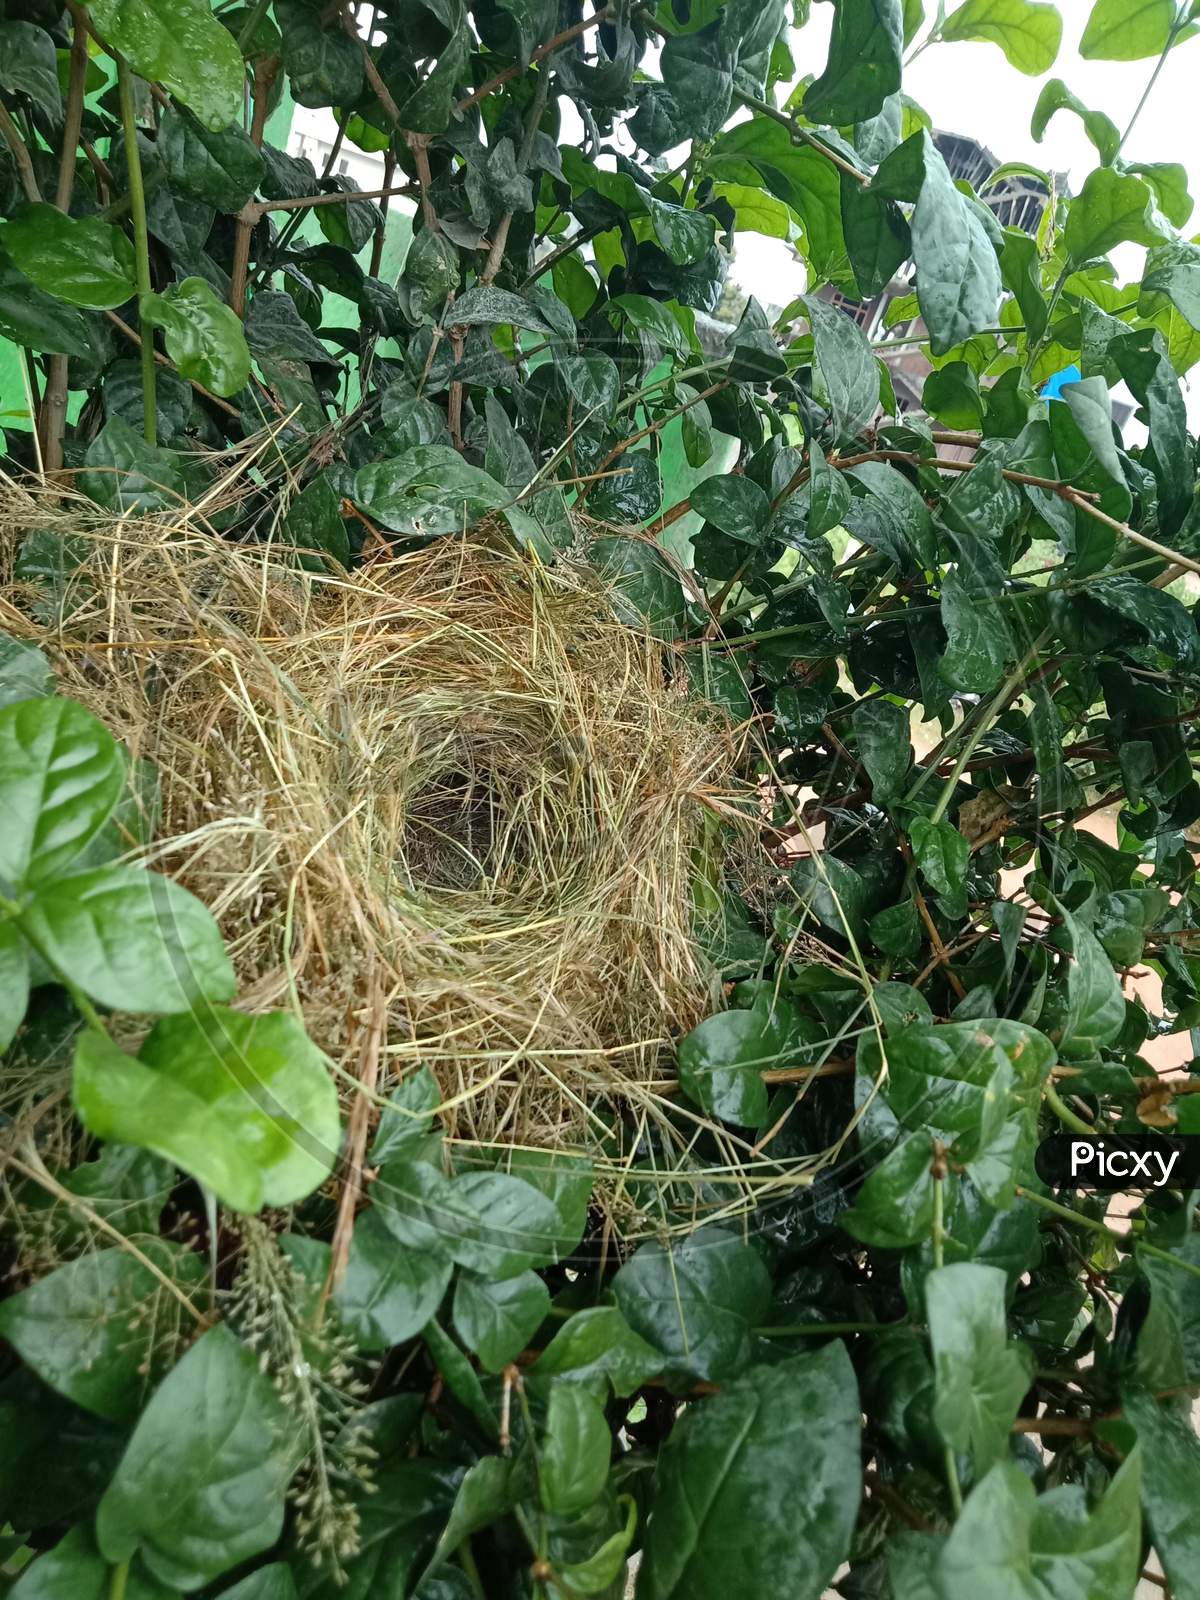 Bird Nest with eggs